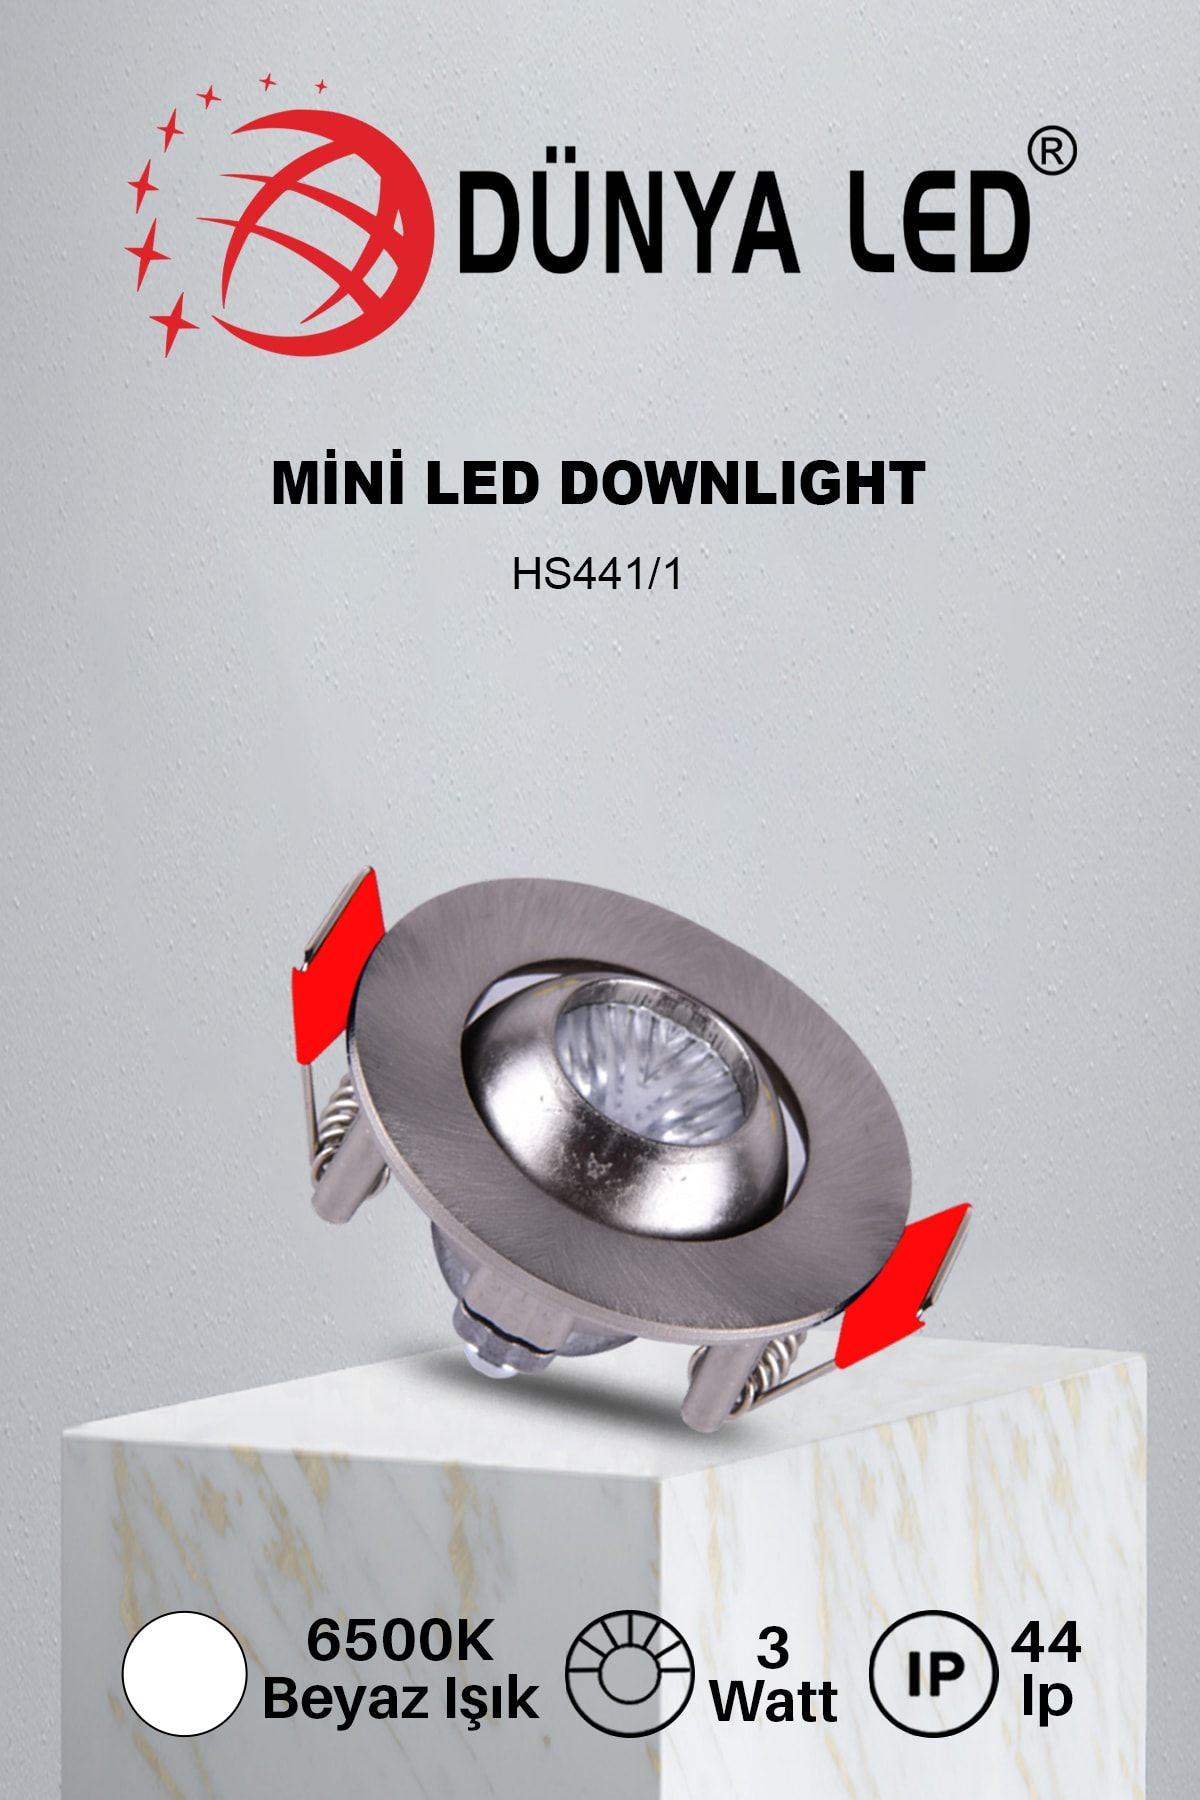 DÜNYA LED Hs.441/1 3w Mini Led Downlıght 6500k Beyaz Işık Drıver